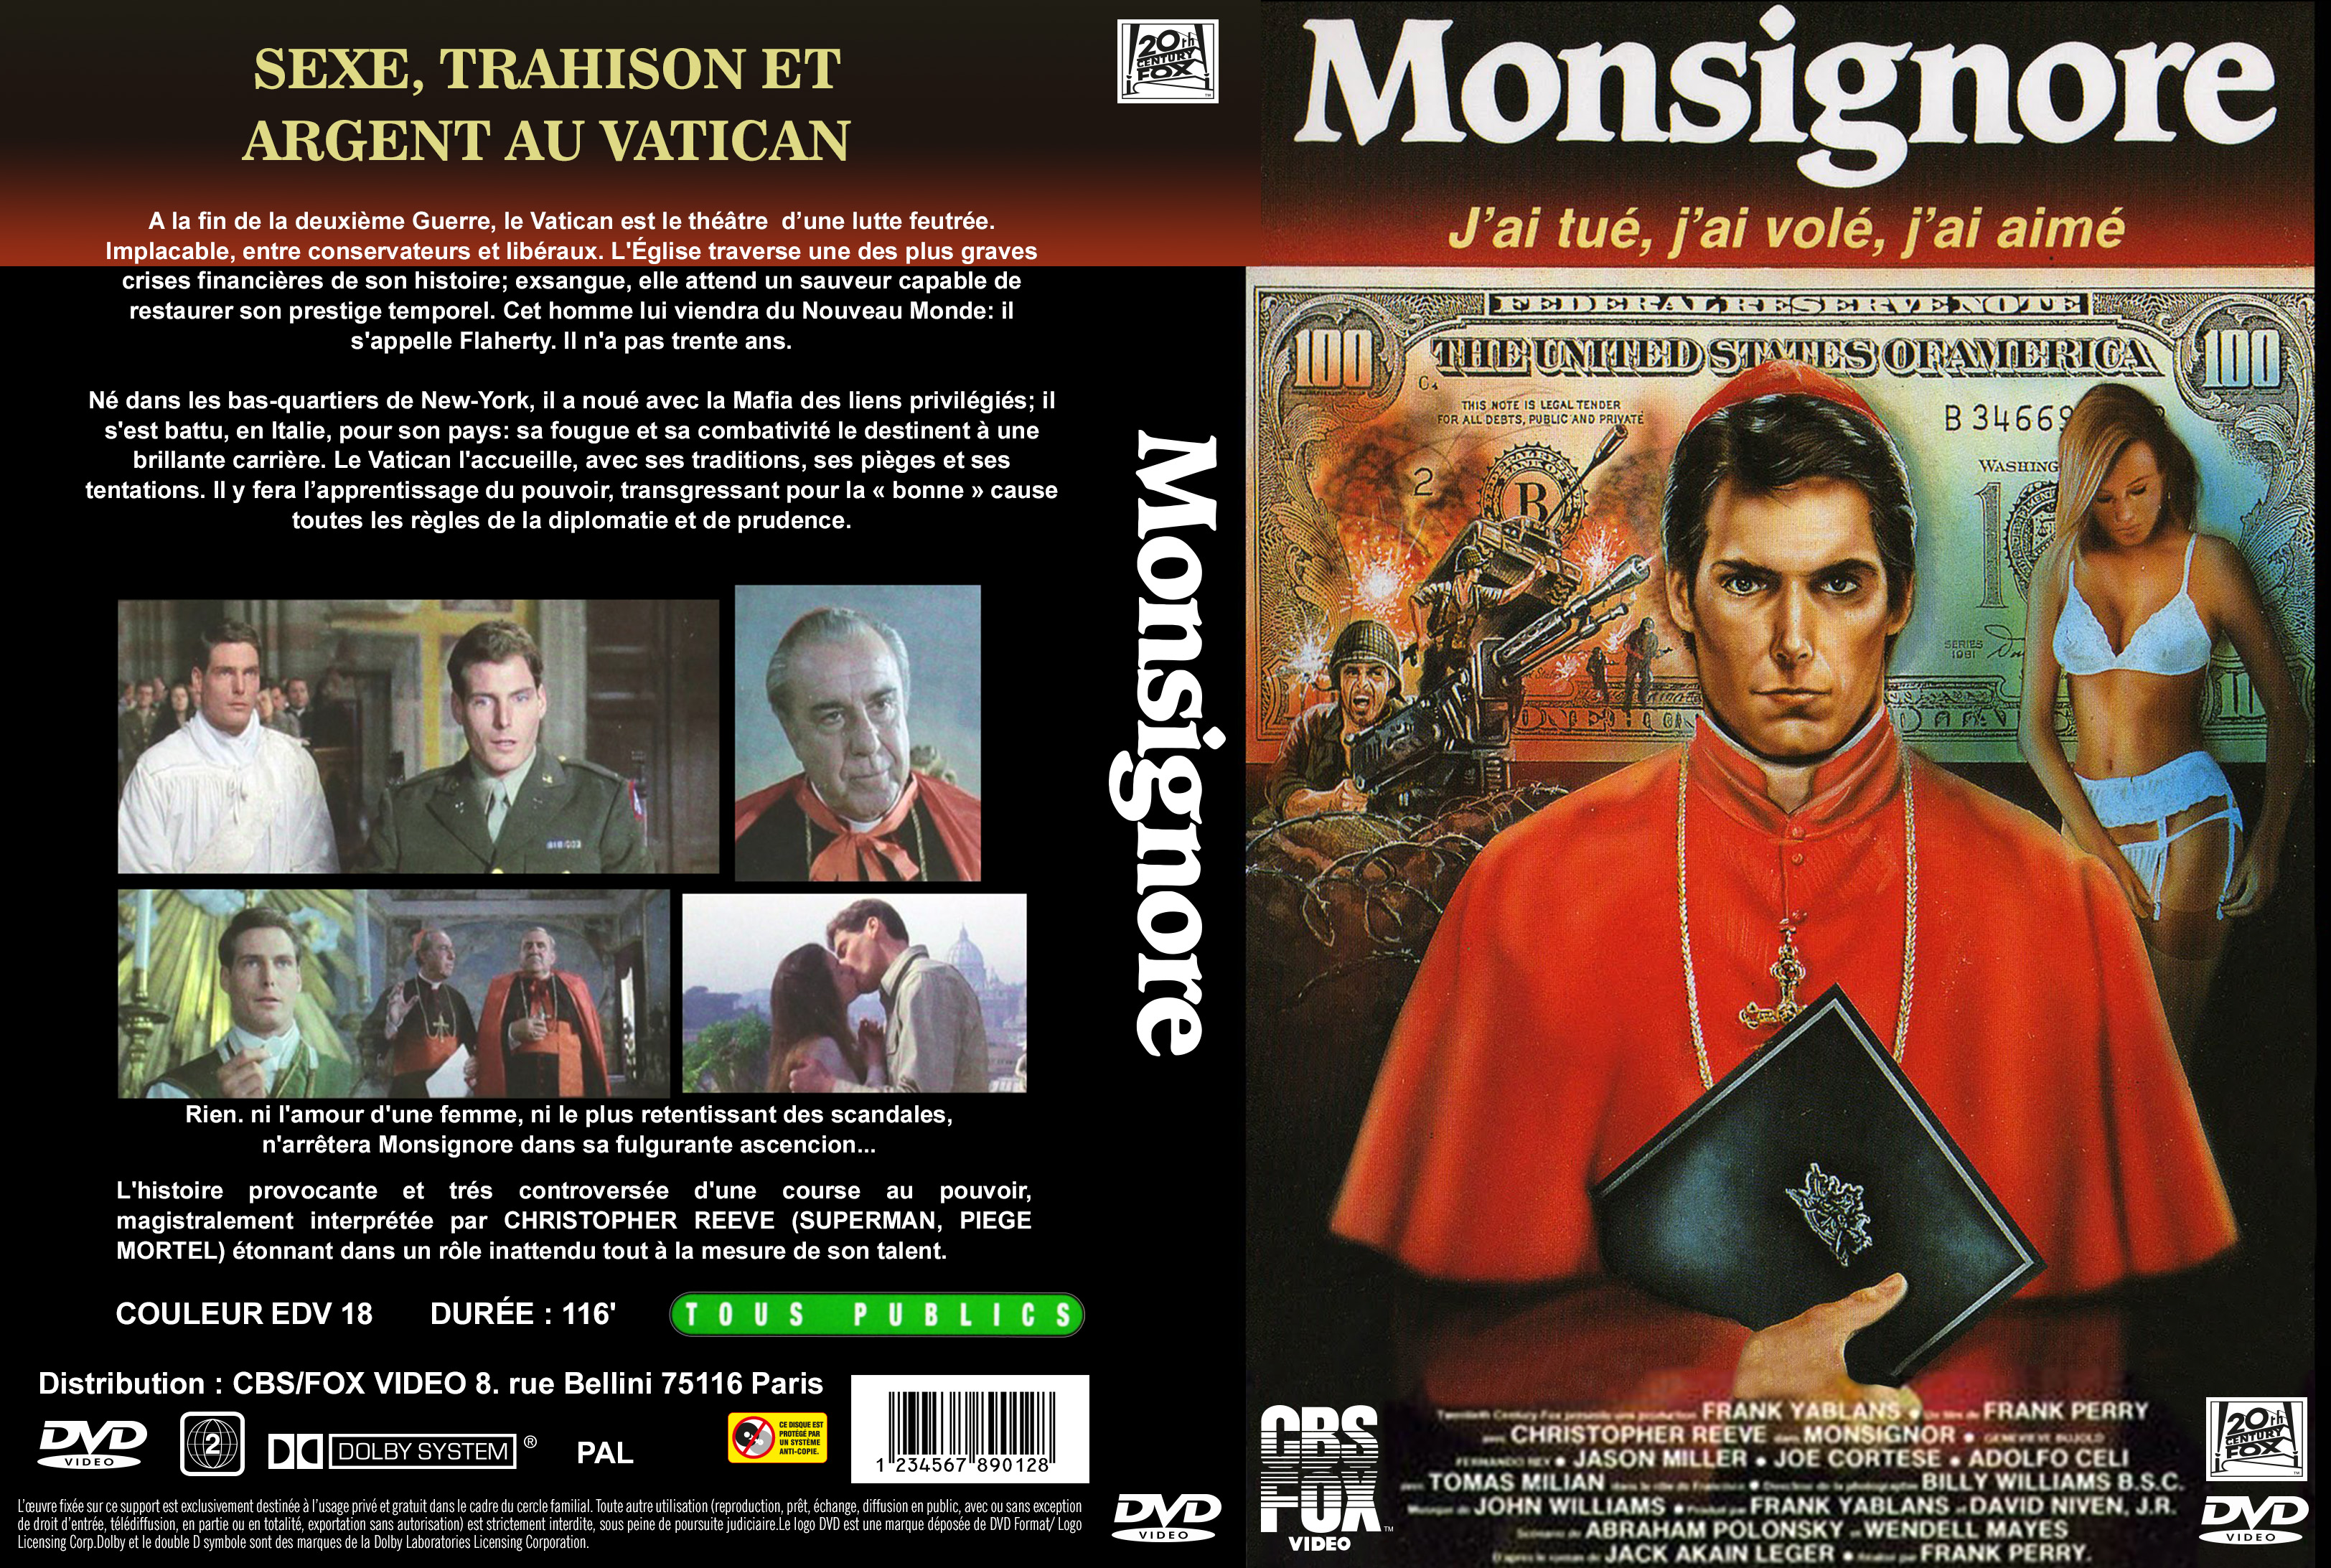 Jaquette DVD Monsignore custom